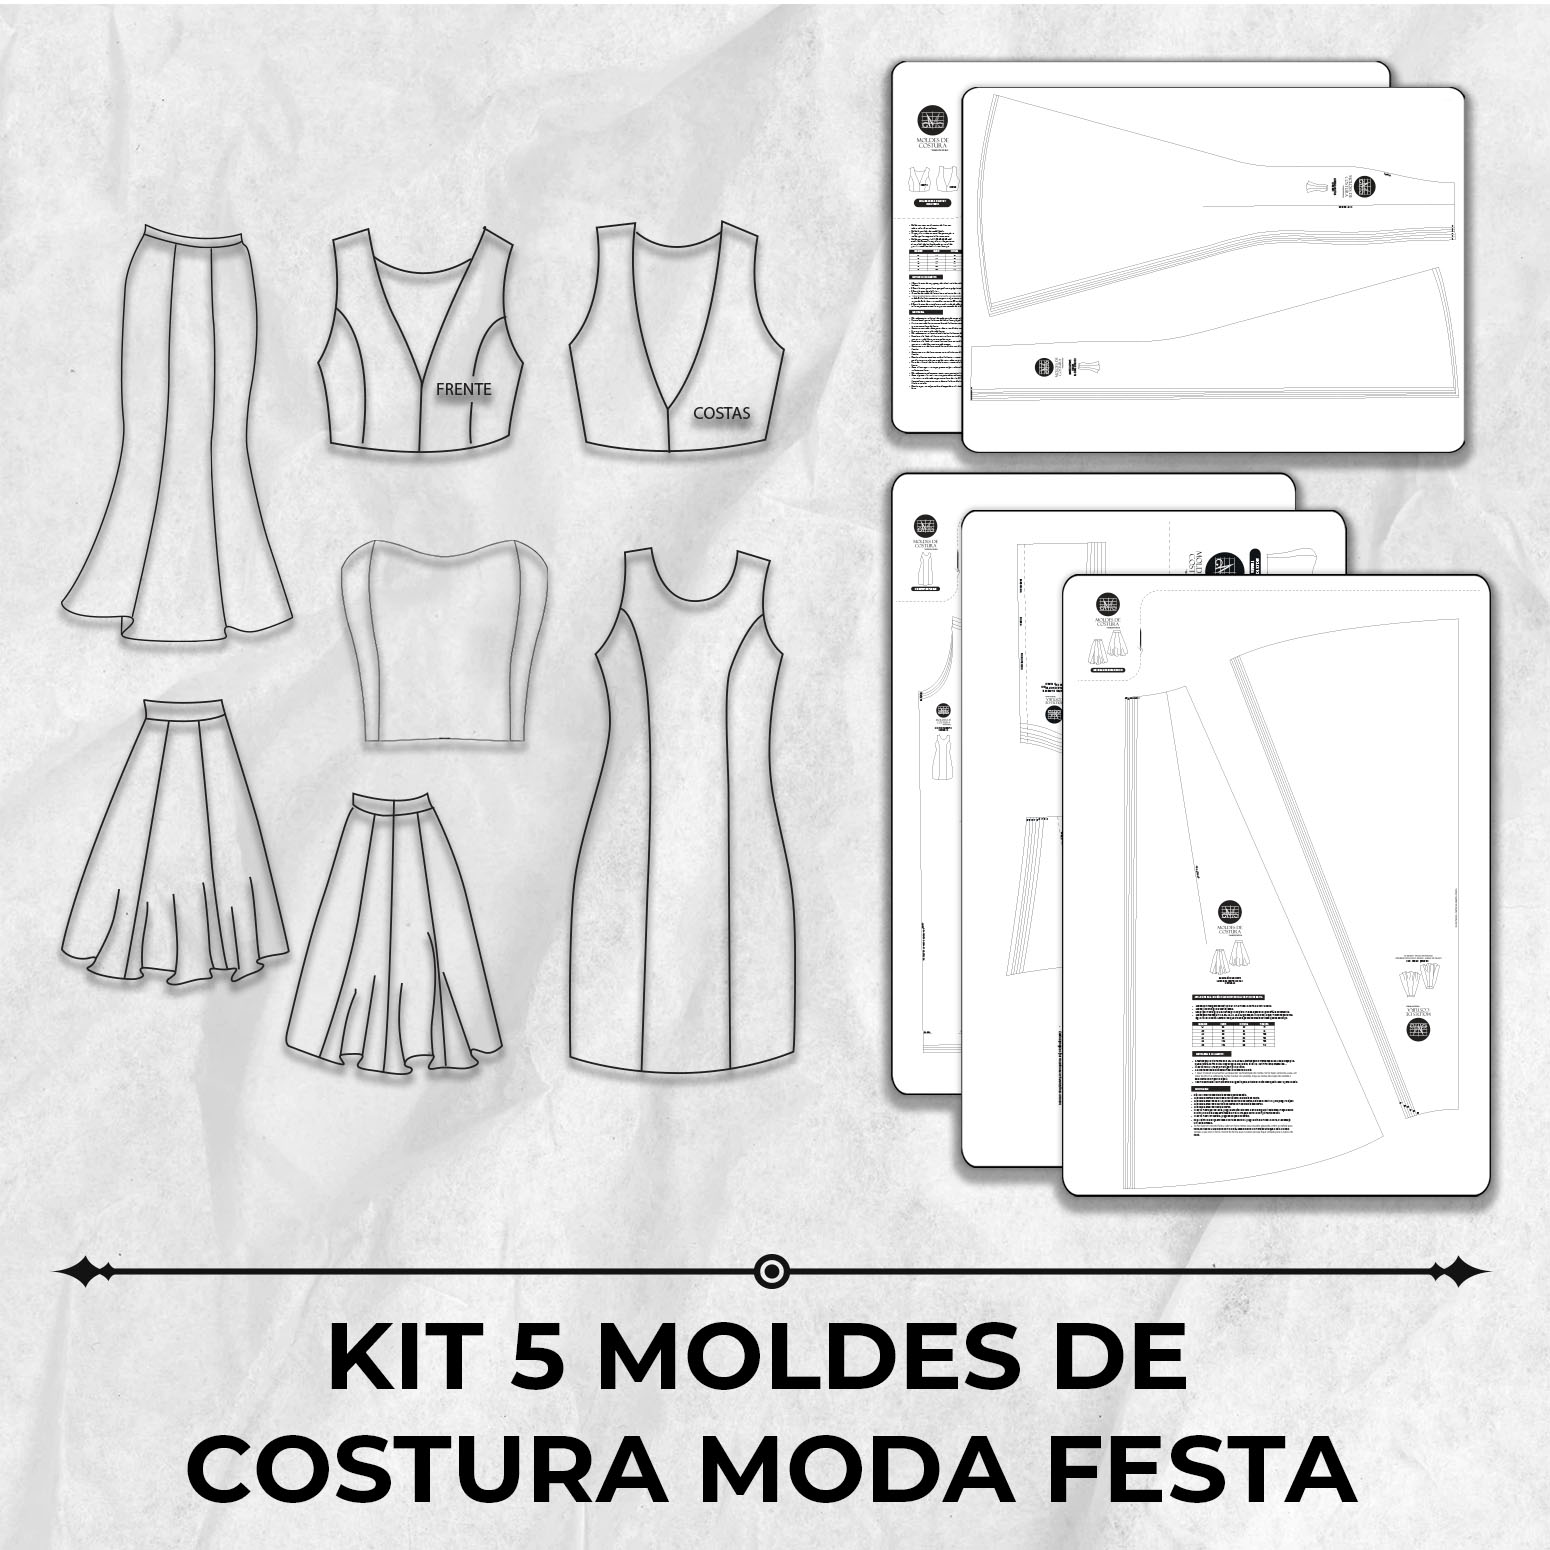 Kit 5 moldes de costura moda festa by Marlene Mukai